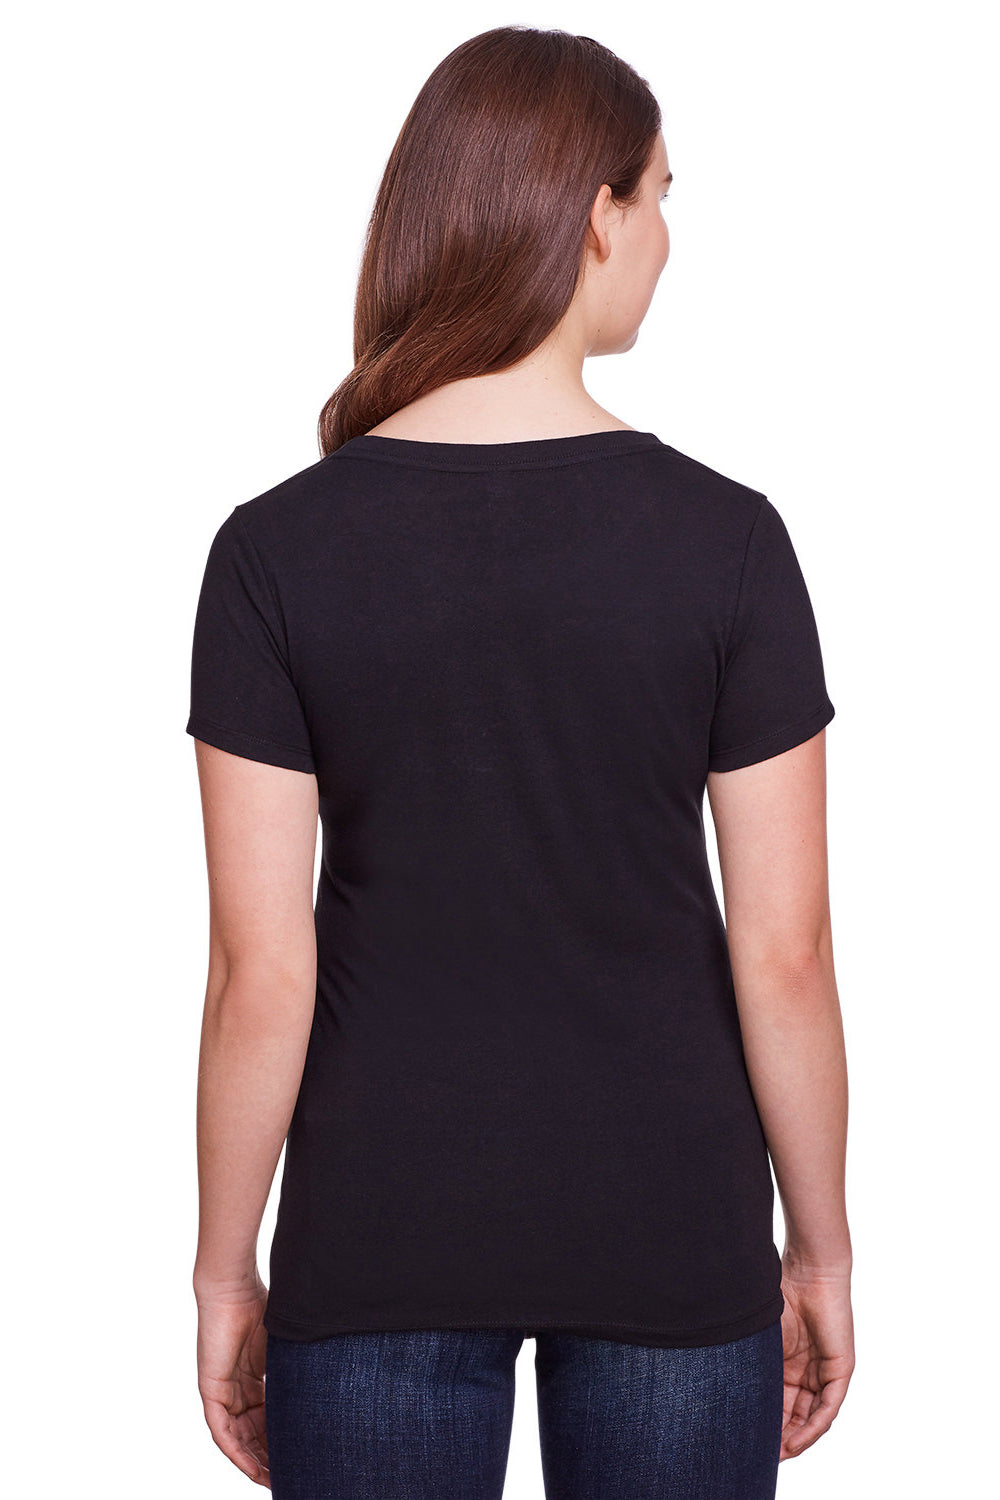 Threadfast Apparel 202A Womens Short Sleeve Crewneck T-Shirt Solid Black Back